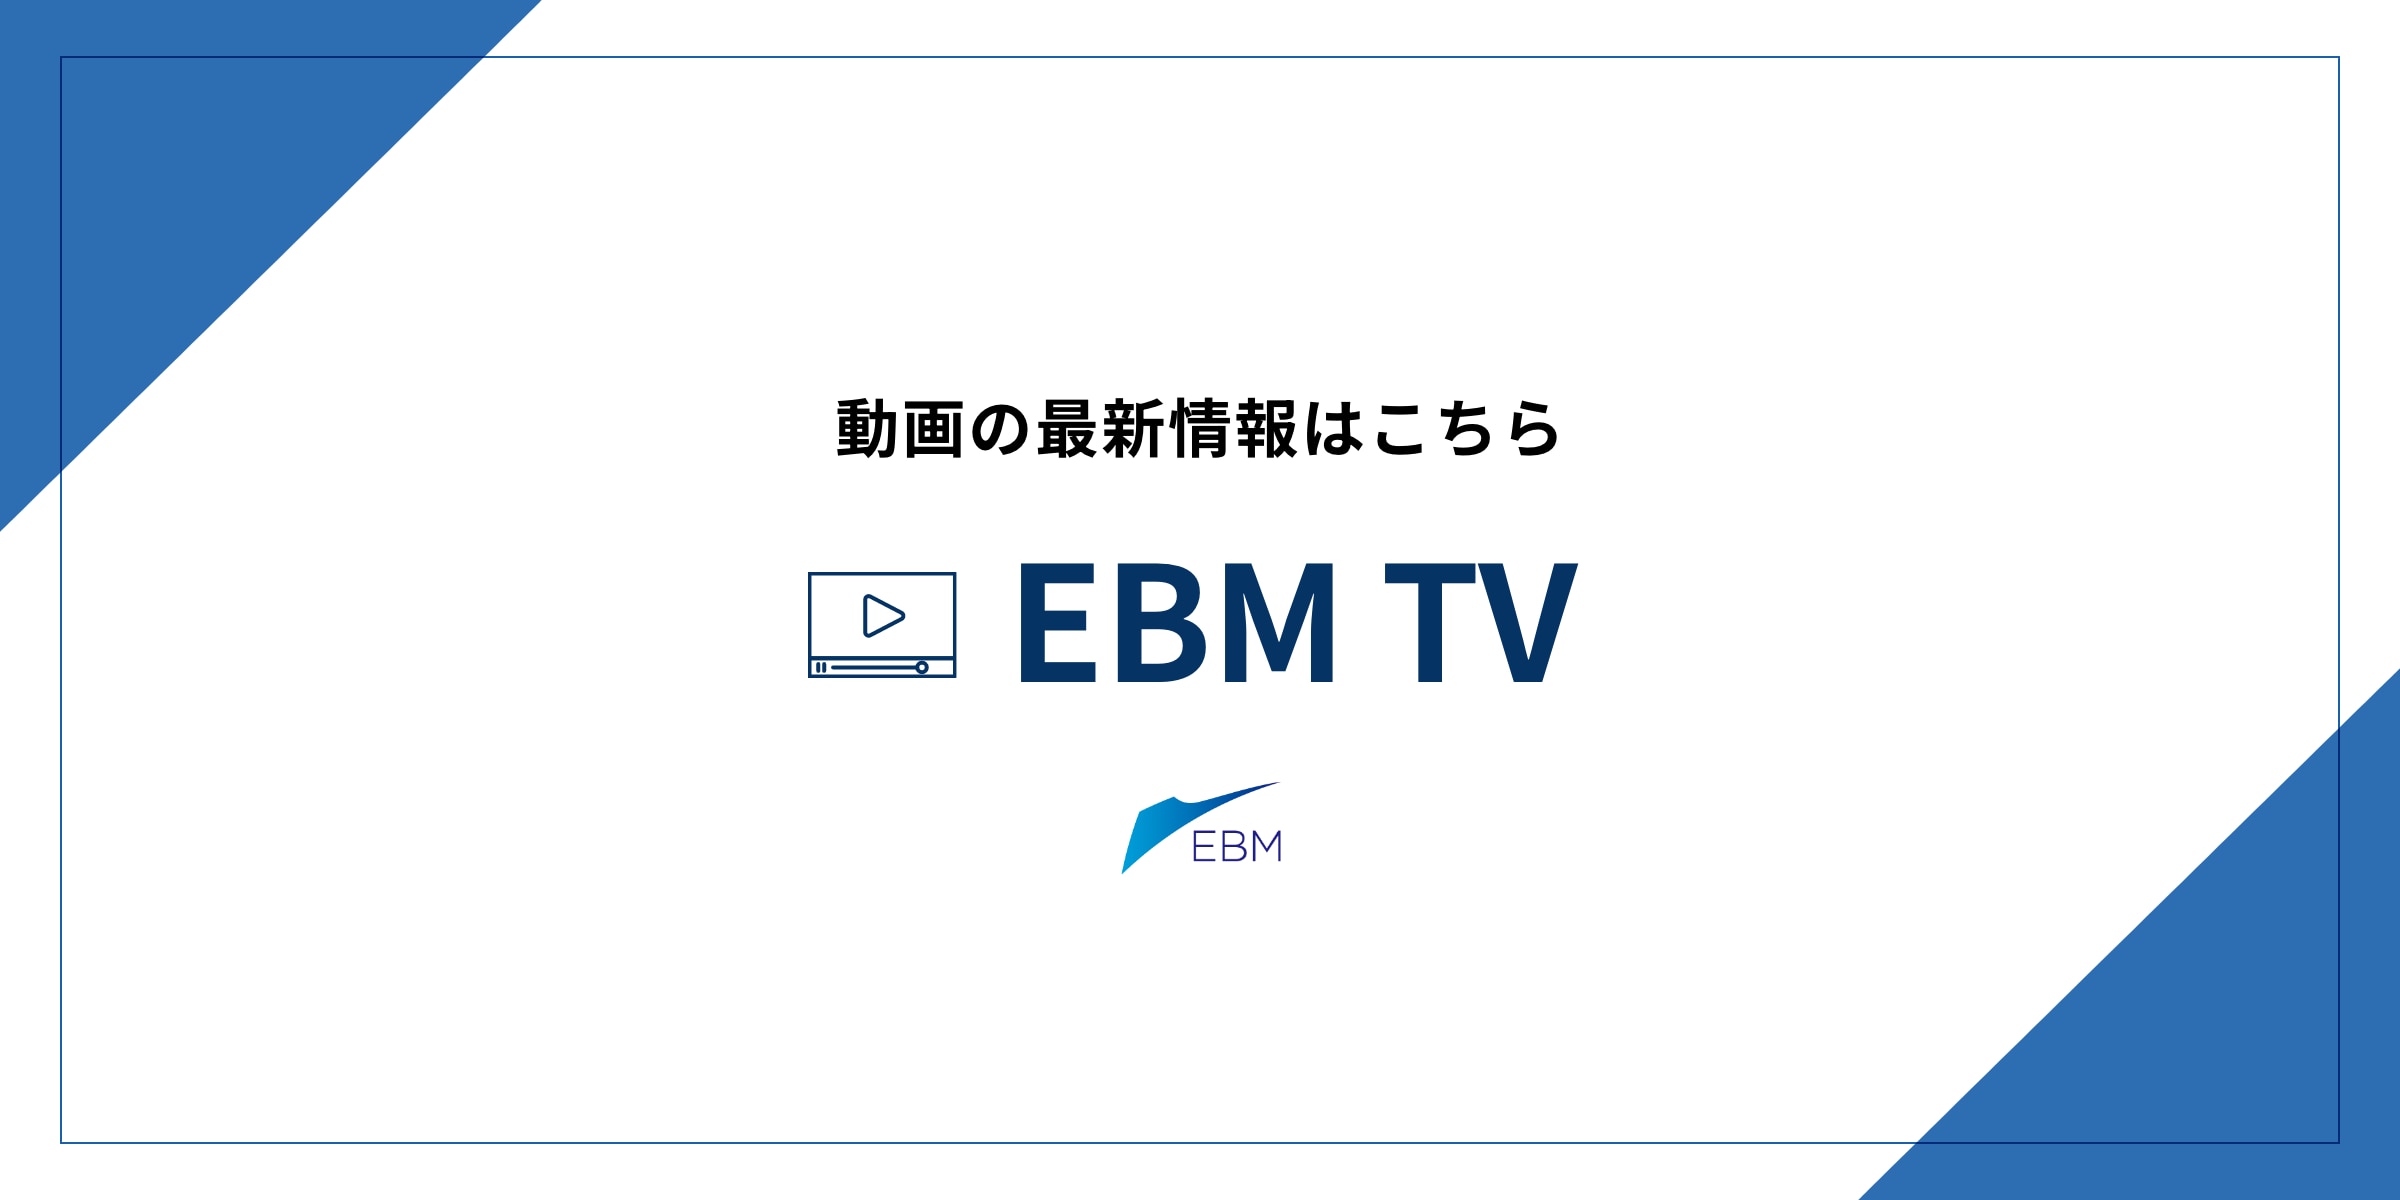 Conozca EBM TV a través de videos